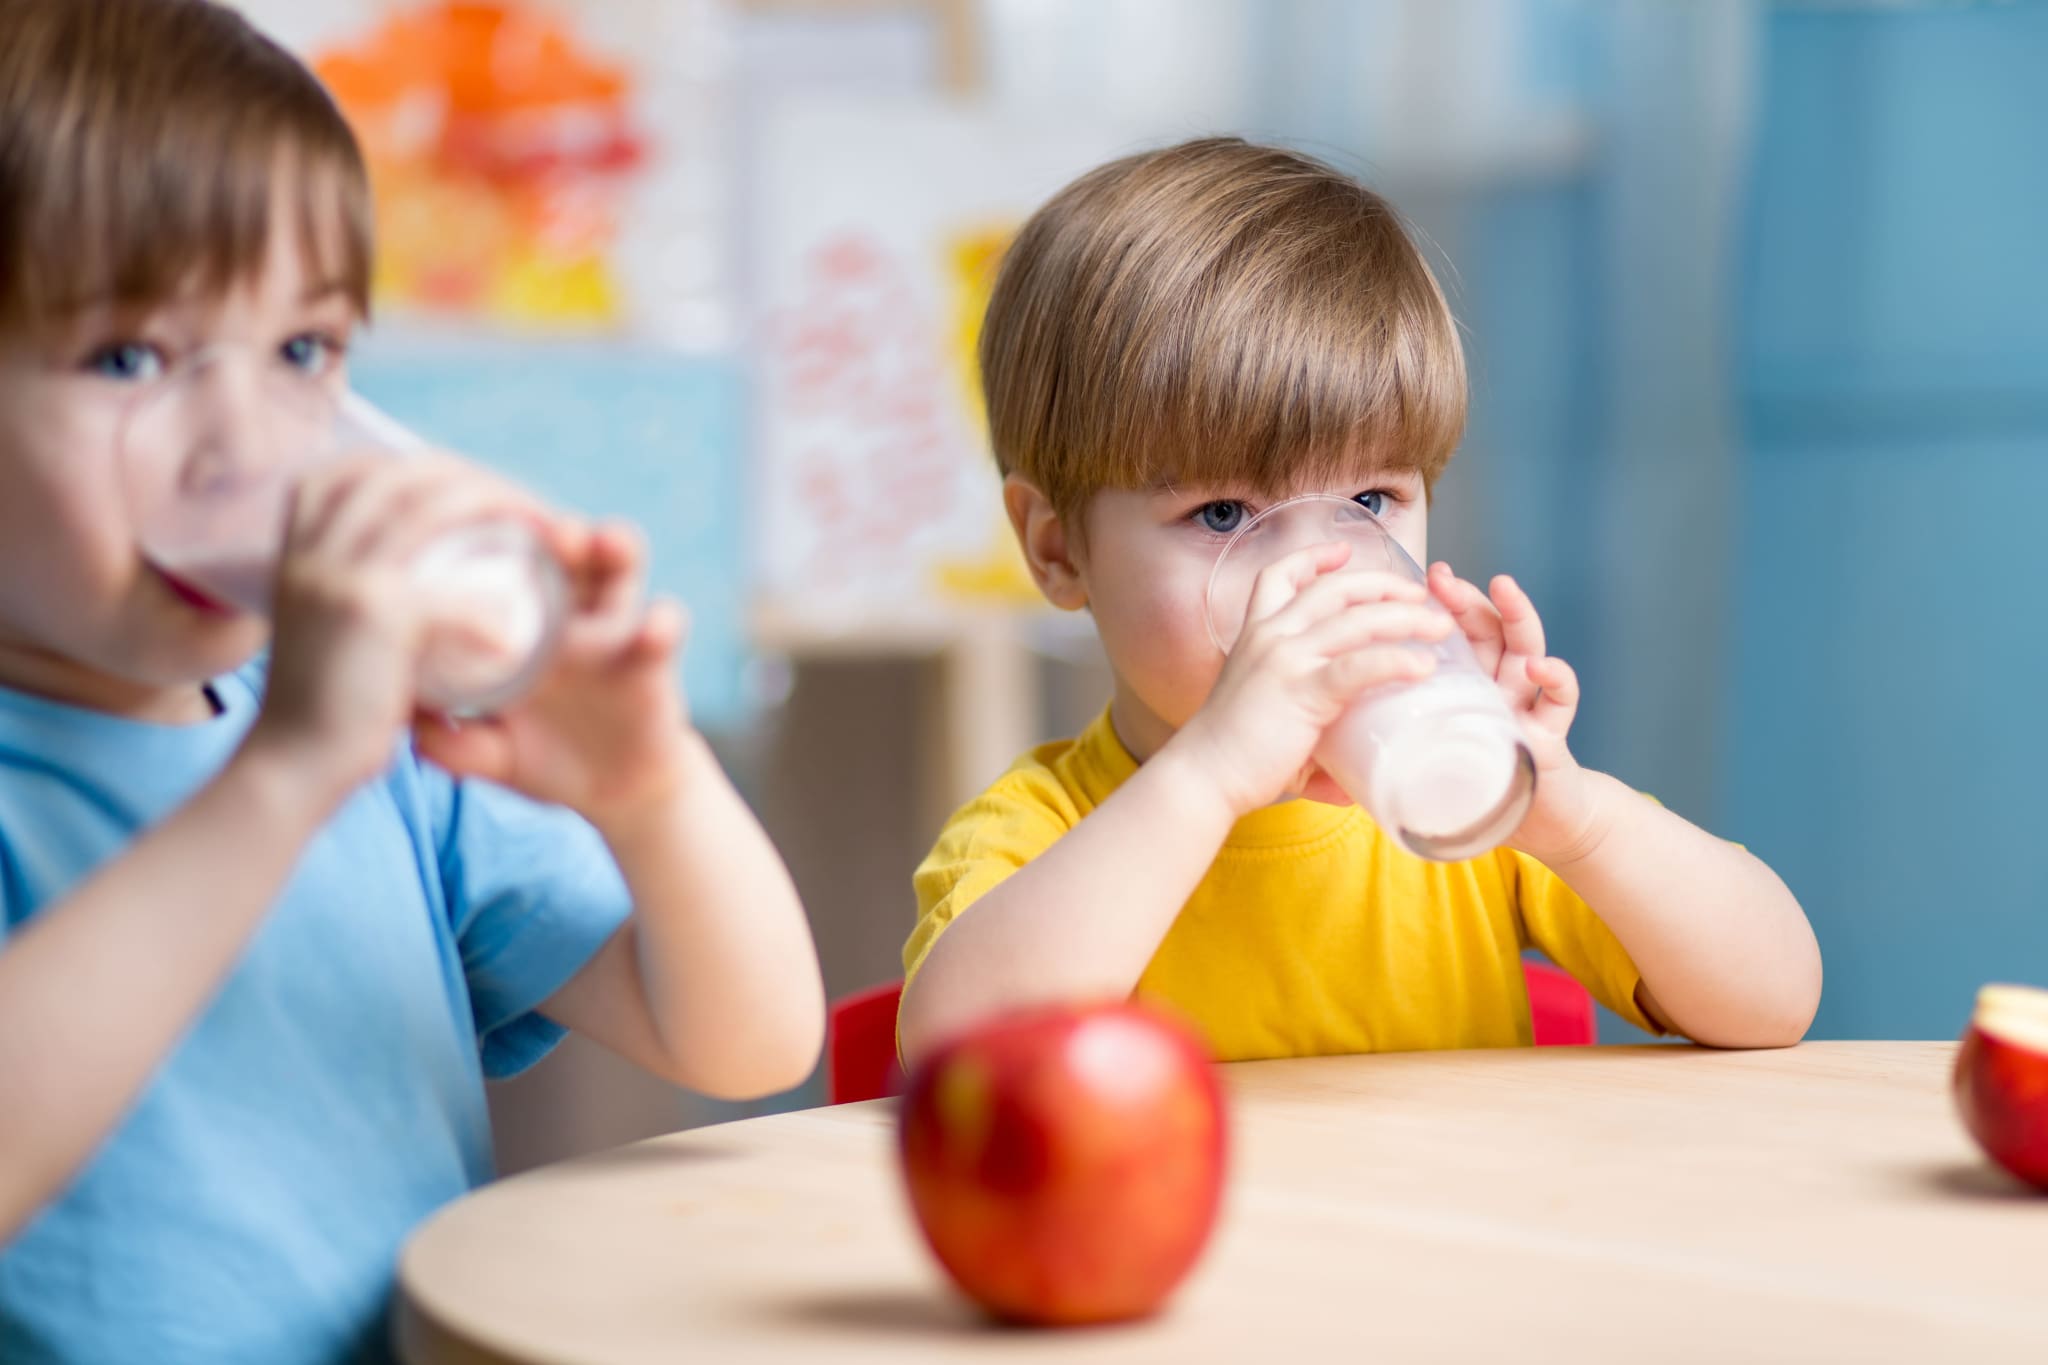 Children at school enjoying a glass of milk